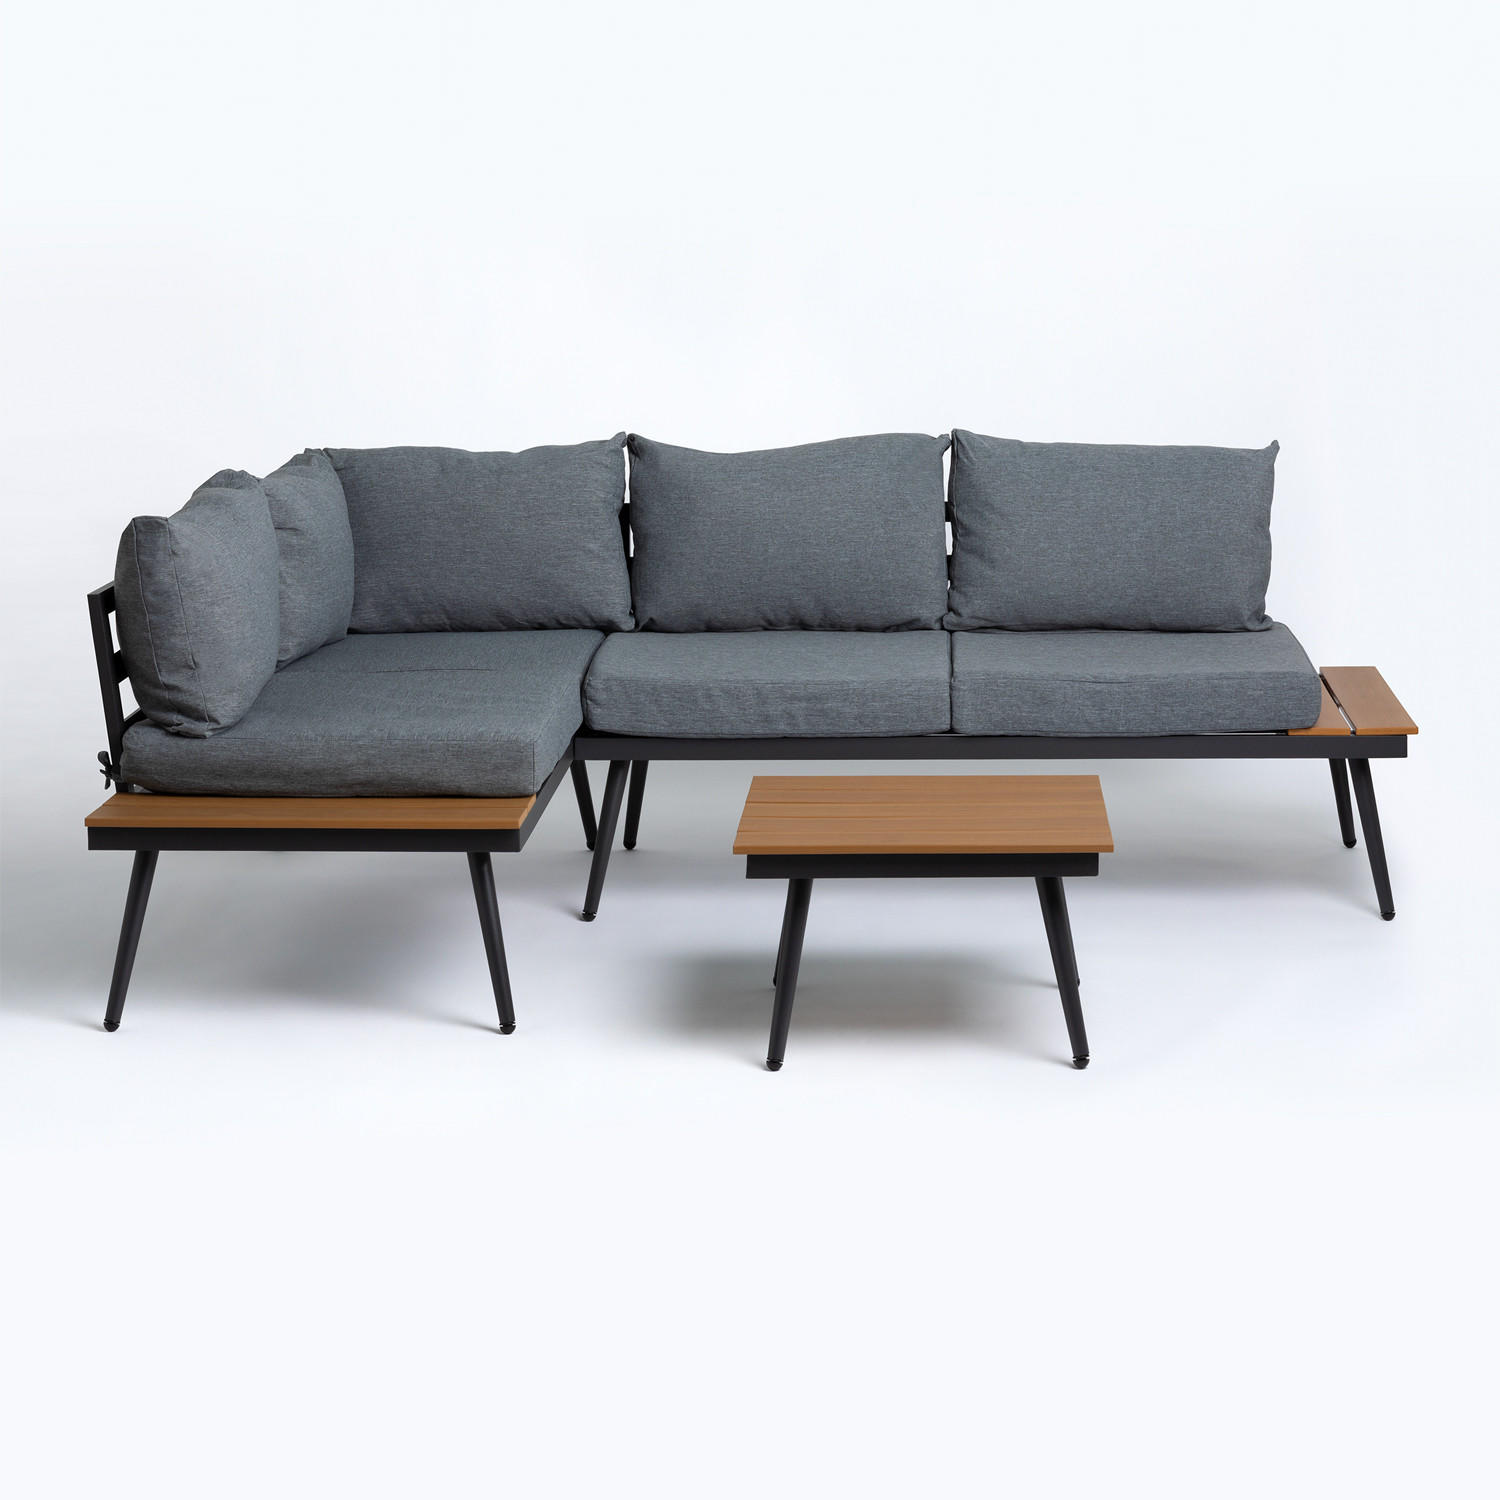 High Class KD Aluminum Outdoor Garden Corner Sofa Furniture Patio Conversation Set